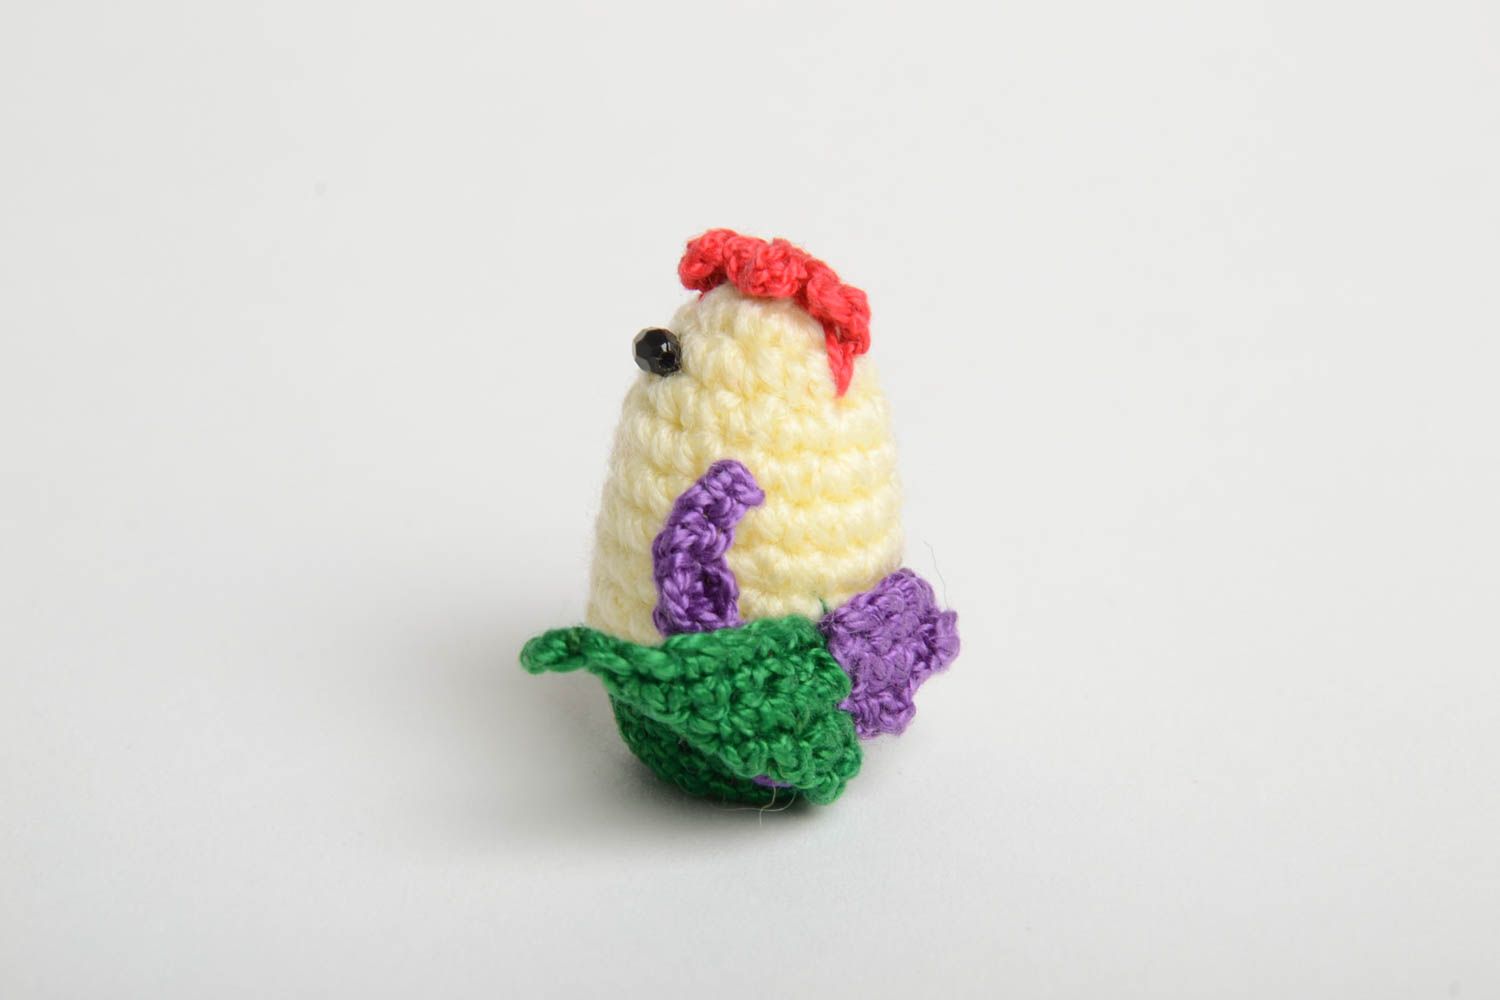 Handmade toy designer toy animal toy gift for baby nursery decor crocheted toy photo 3